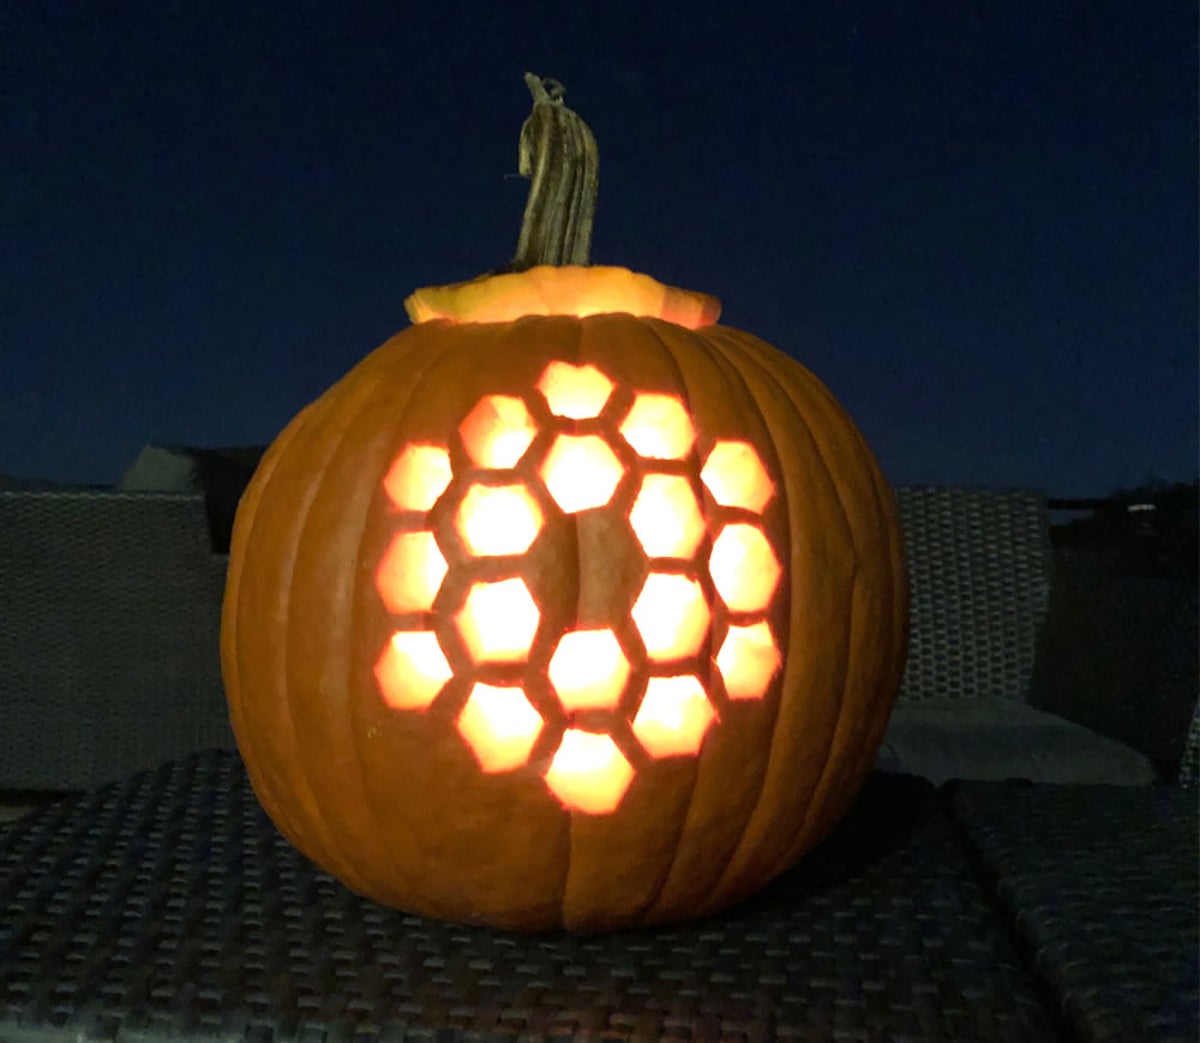 James Webb Space Telescope pumpkin stencils can add cosmic mystery to Halloween